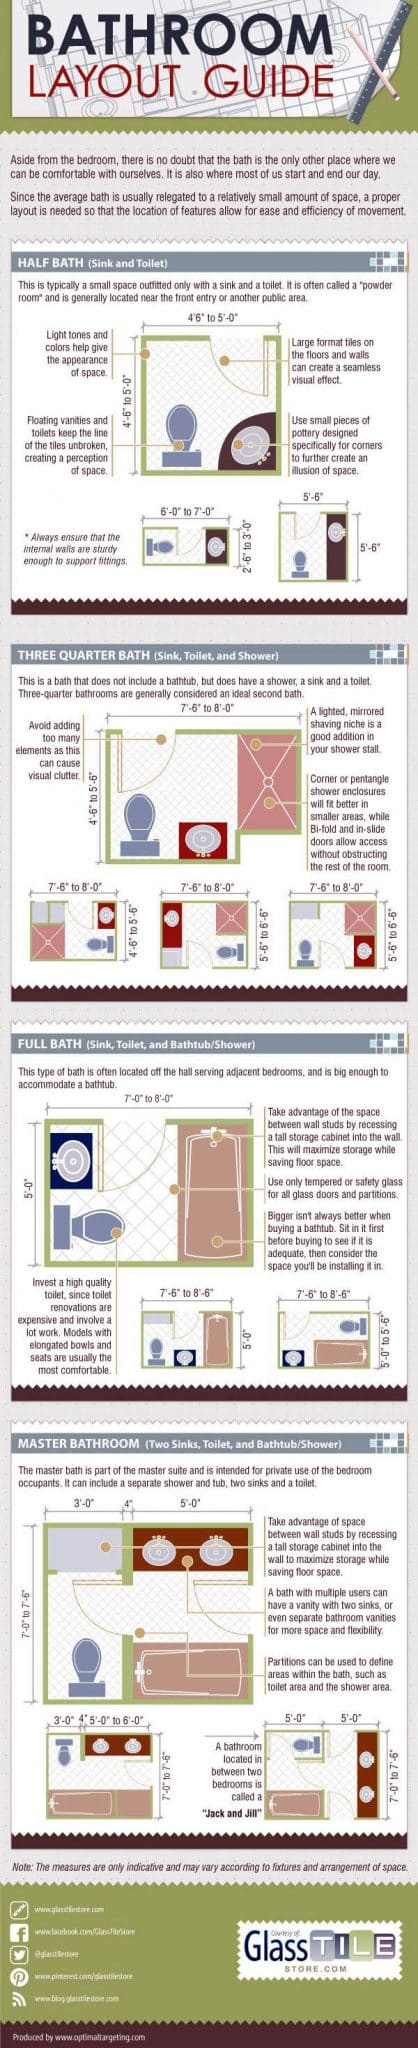 Bathroom layout plan